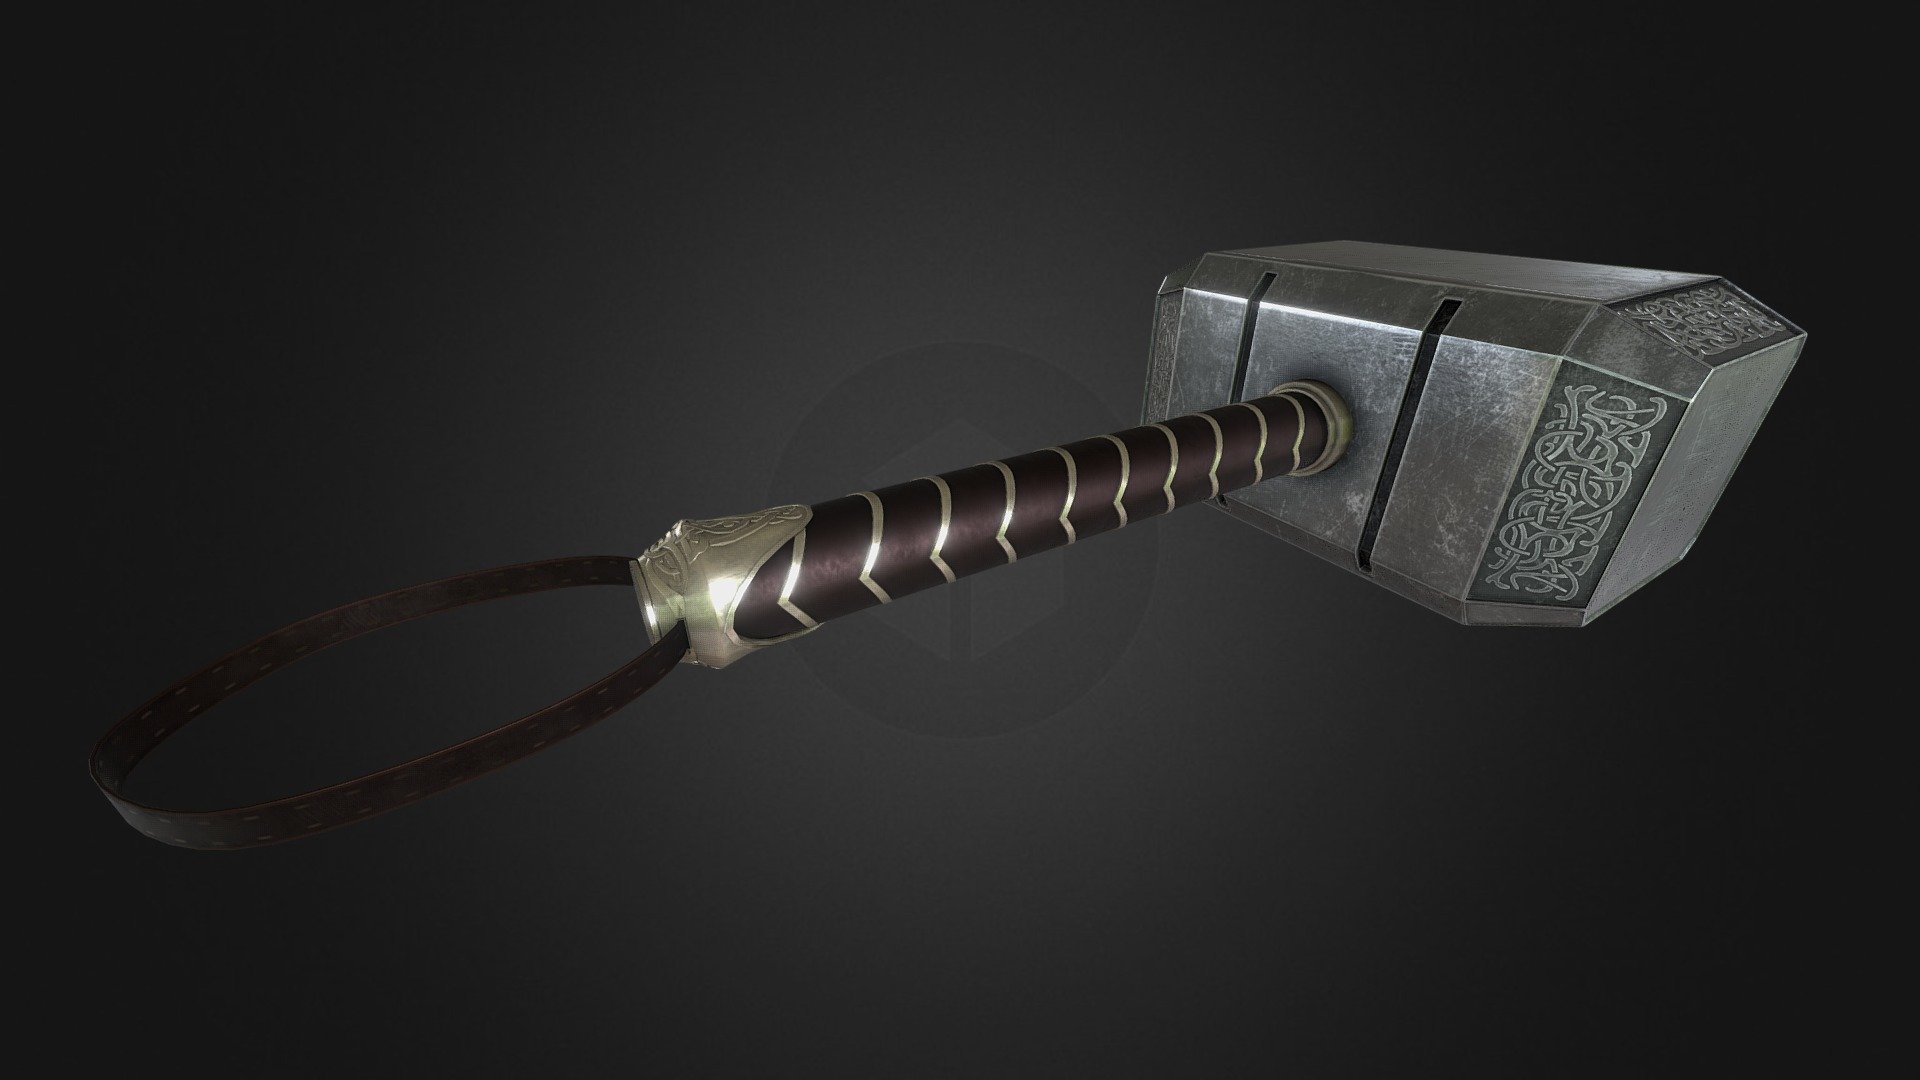 Thor's Hammer - Mjolnir!

From concept of &ldquo;Marvel Studios